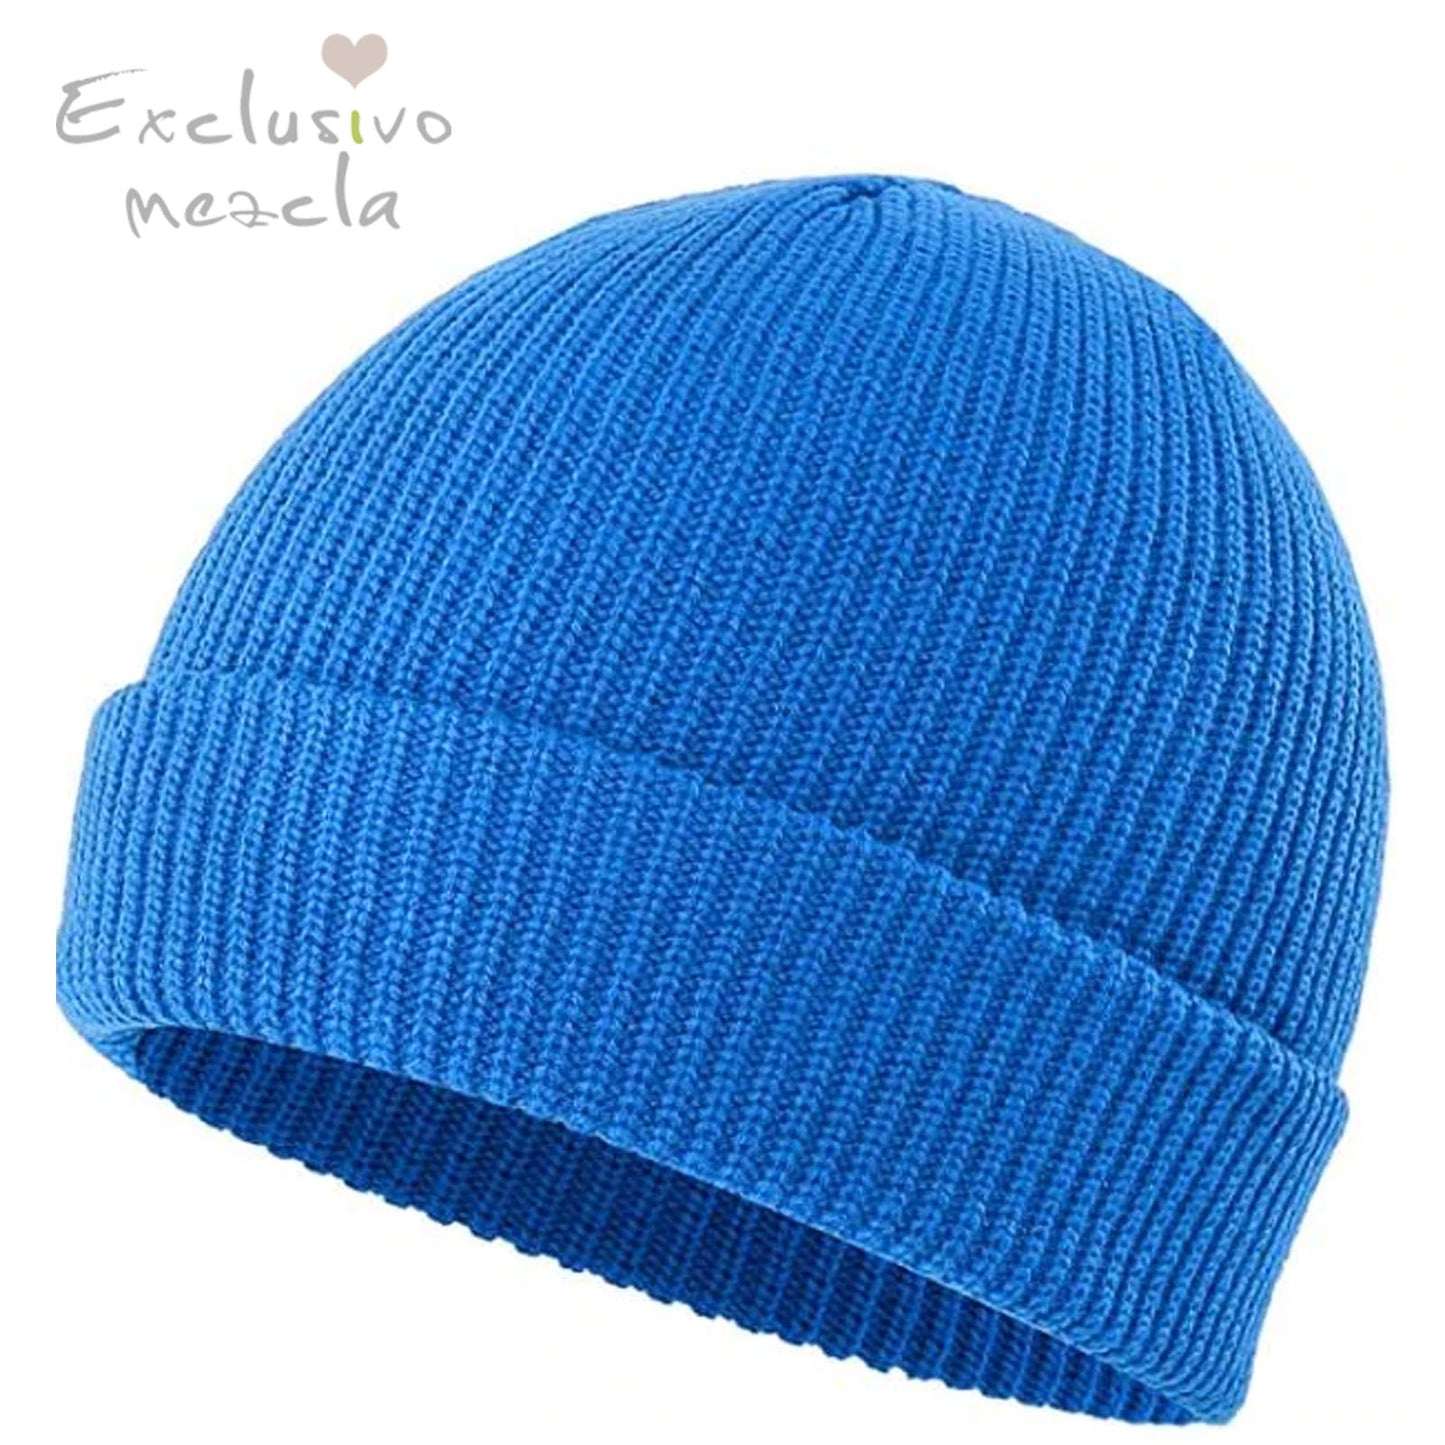 Exclusivo Mezcla Classic Men's Warm Winter Hats Acrylic Knit Cuff Beanie Cap Daily Beanie Hat